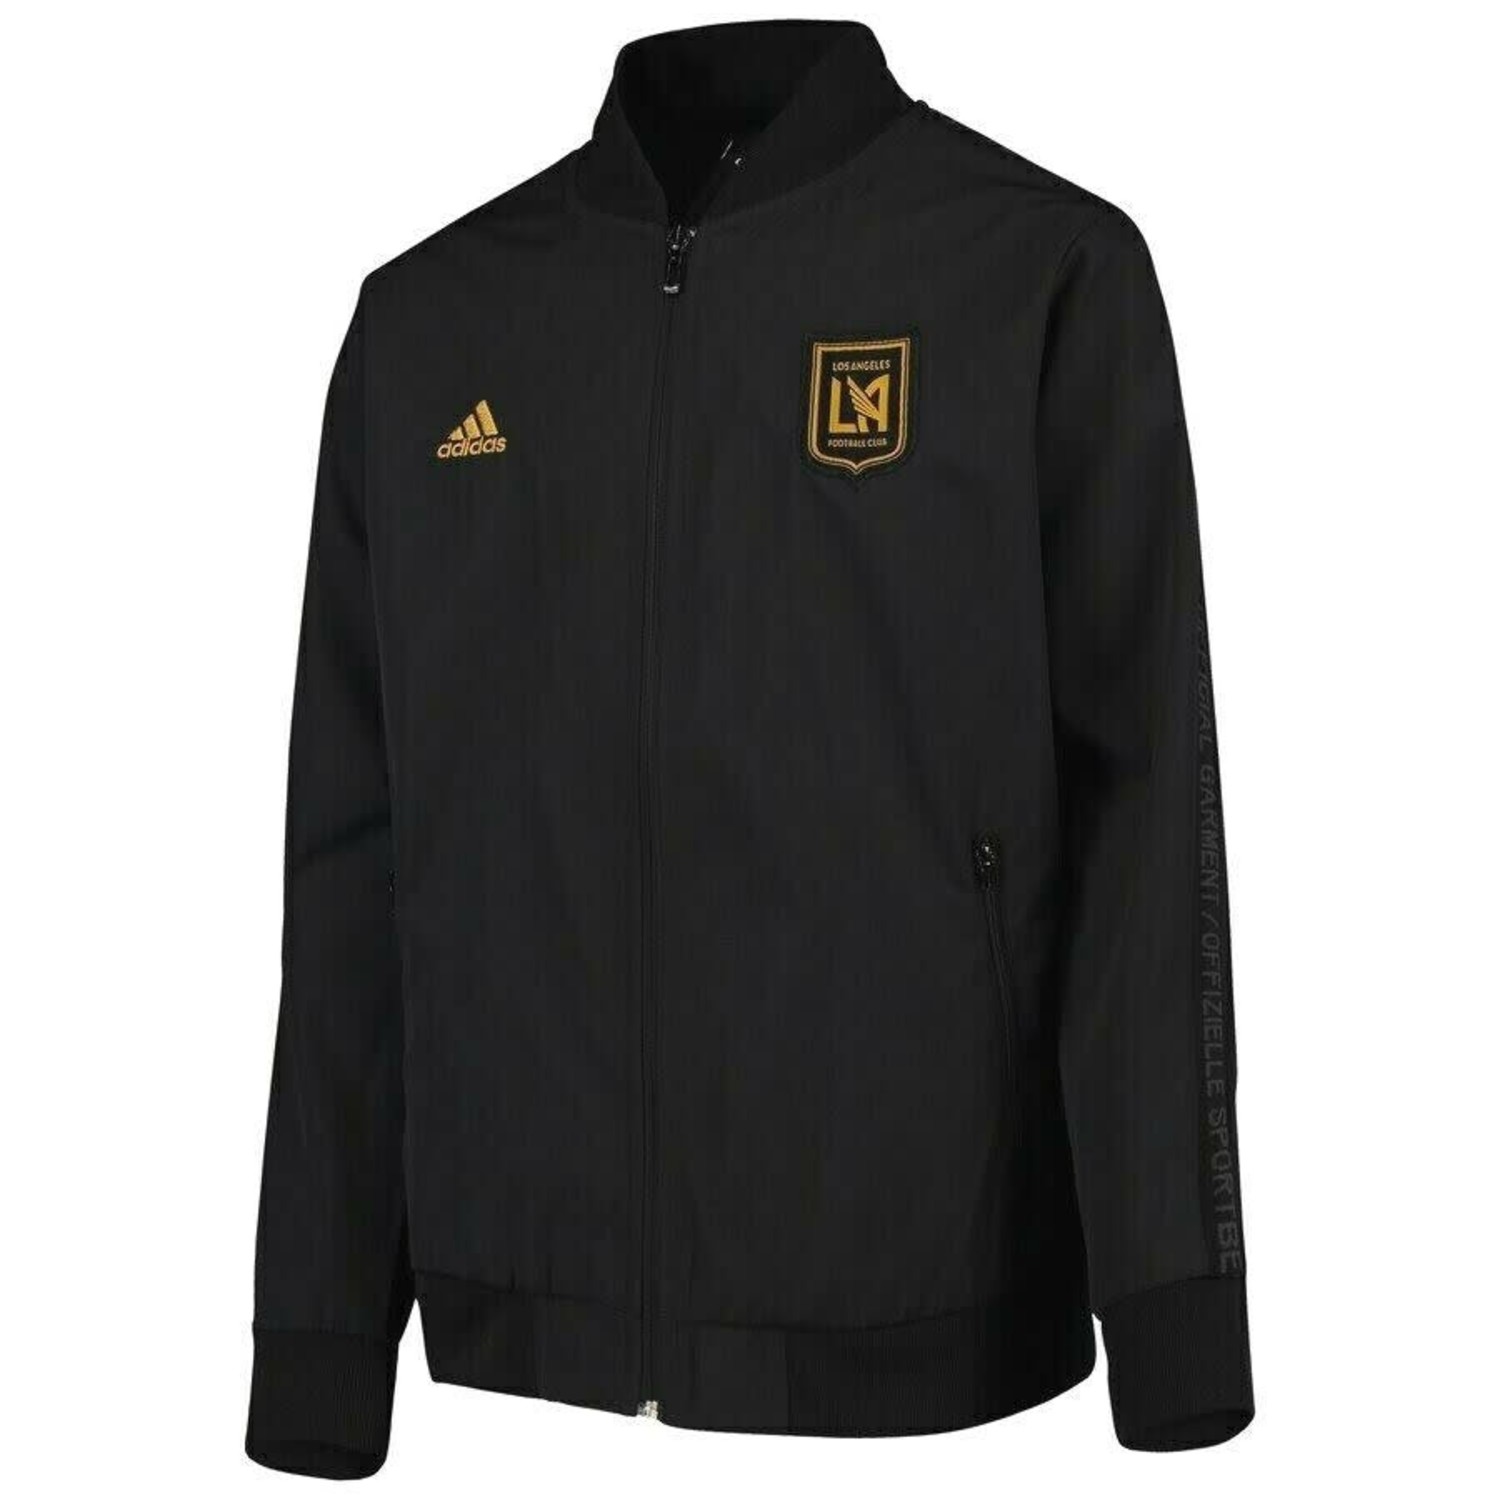 LAFC M adidas 19 Anthem Jacket - The Locker Room of Downey